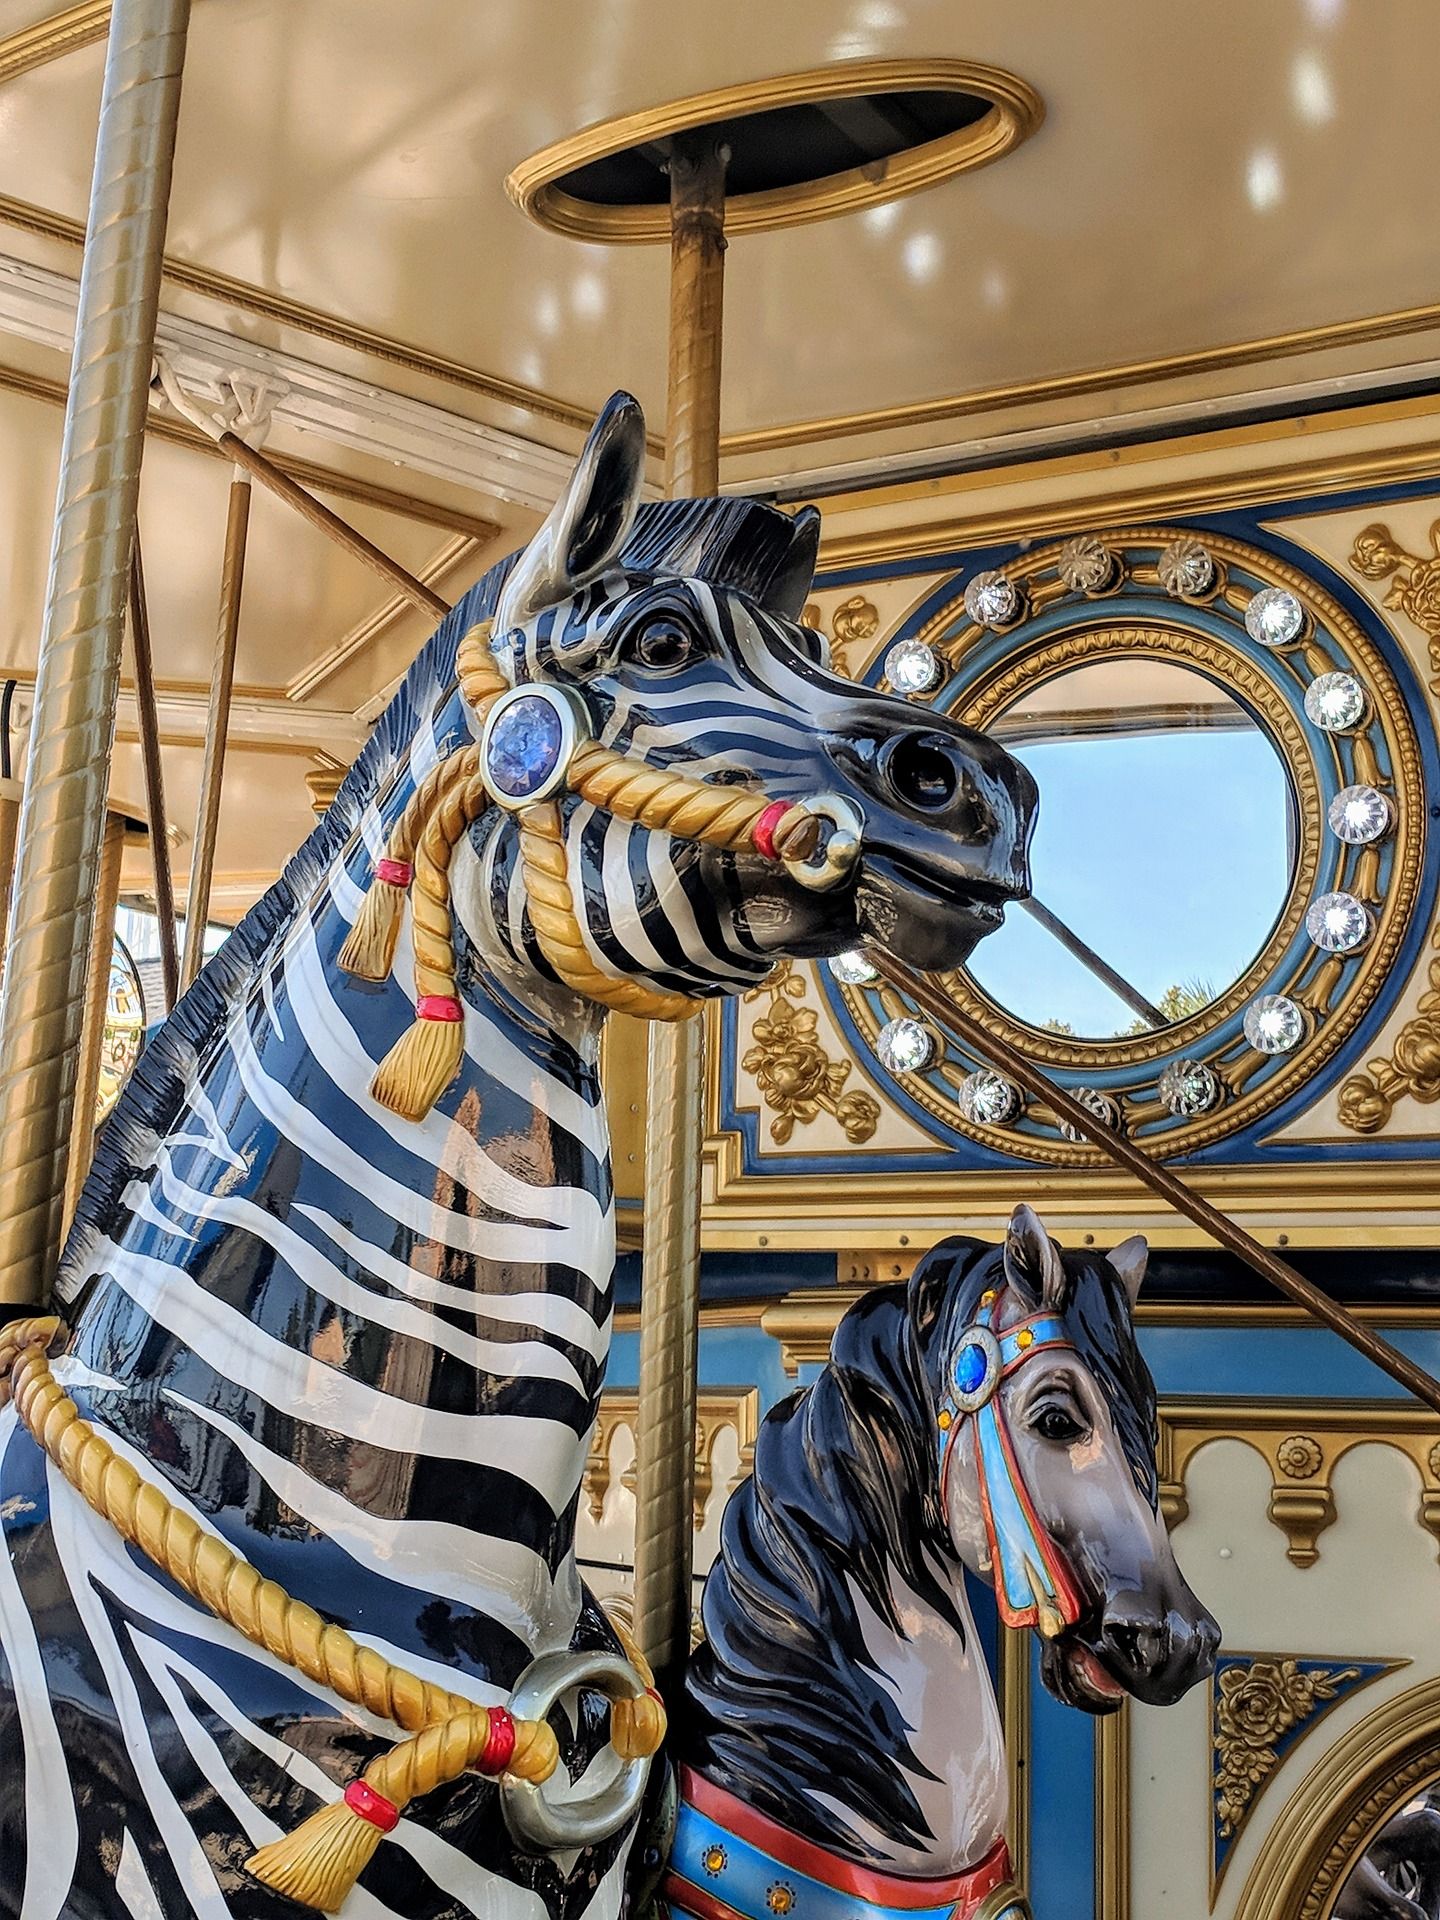 Carousel ride at the Kemah Boardwalk